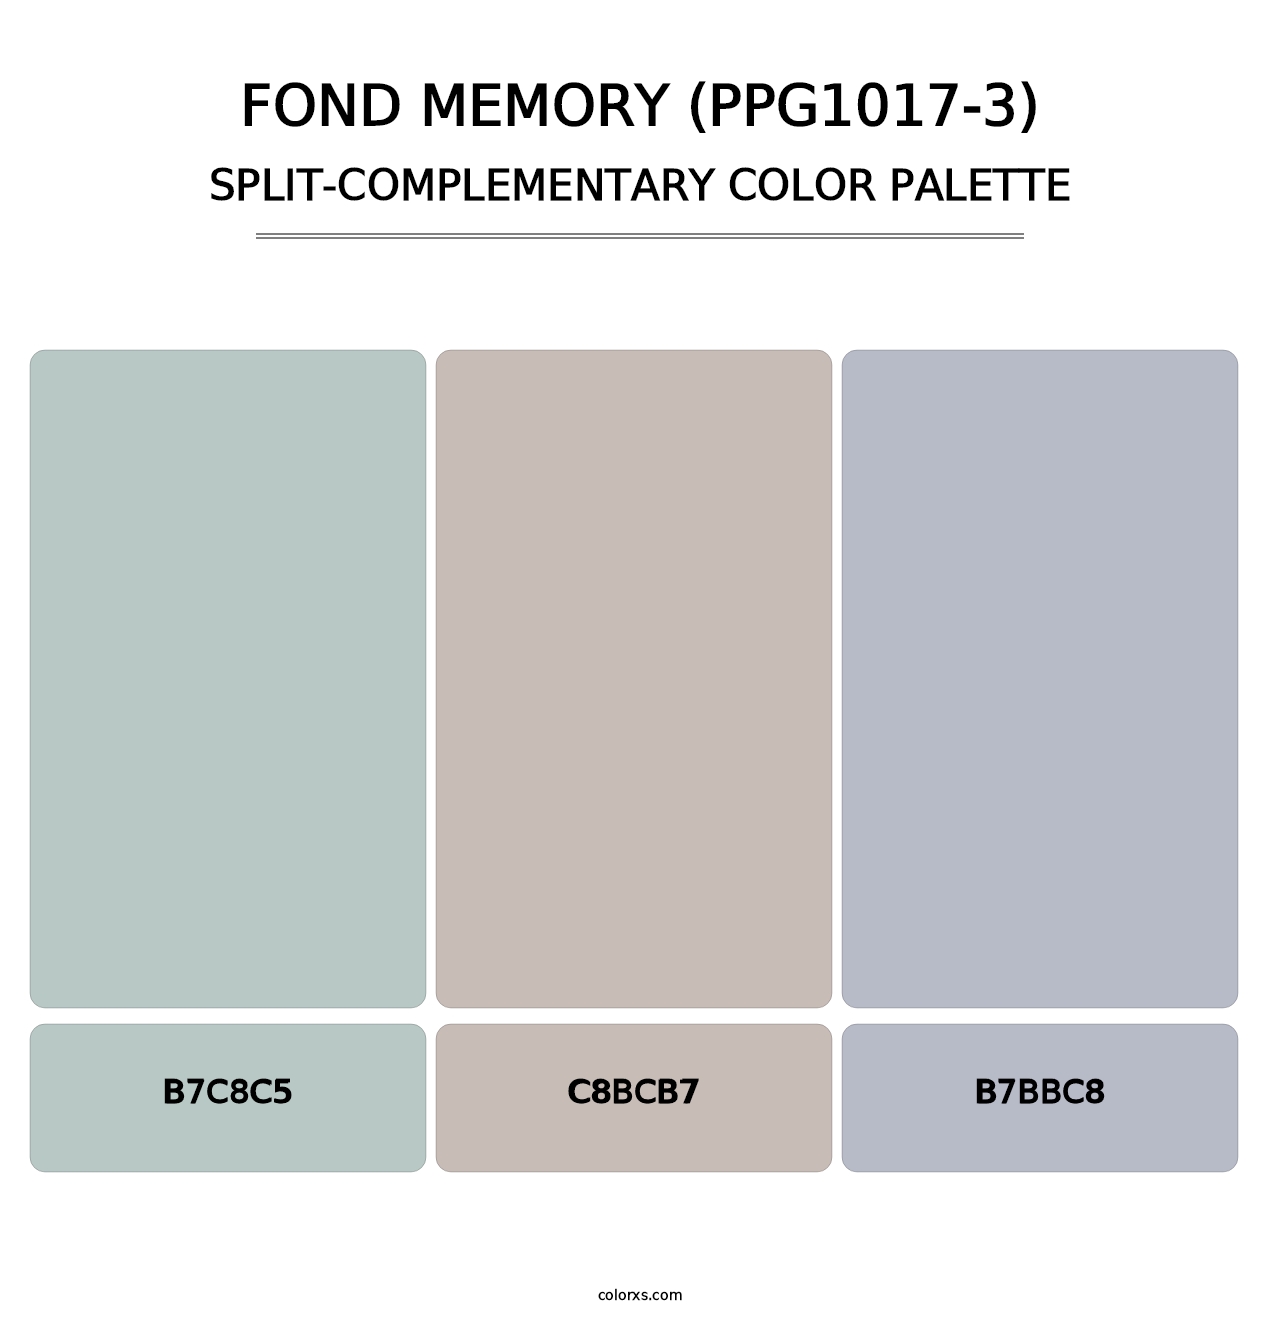 Fond Memory (PPG1017-3) - Split-Complementary Color Palette